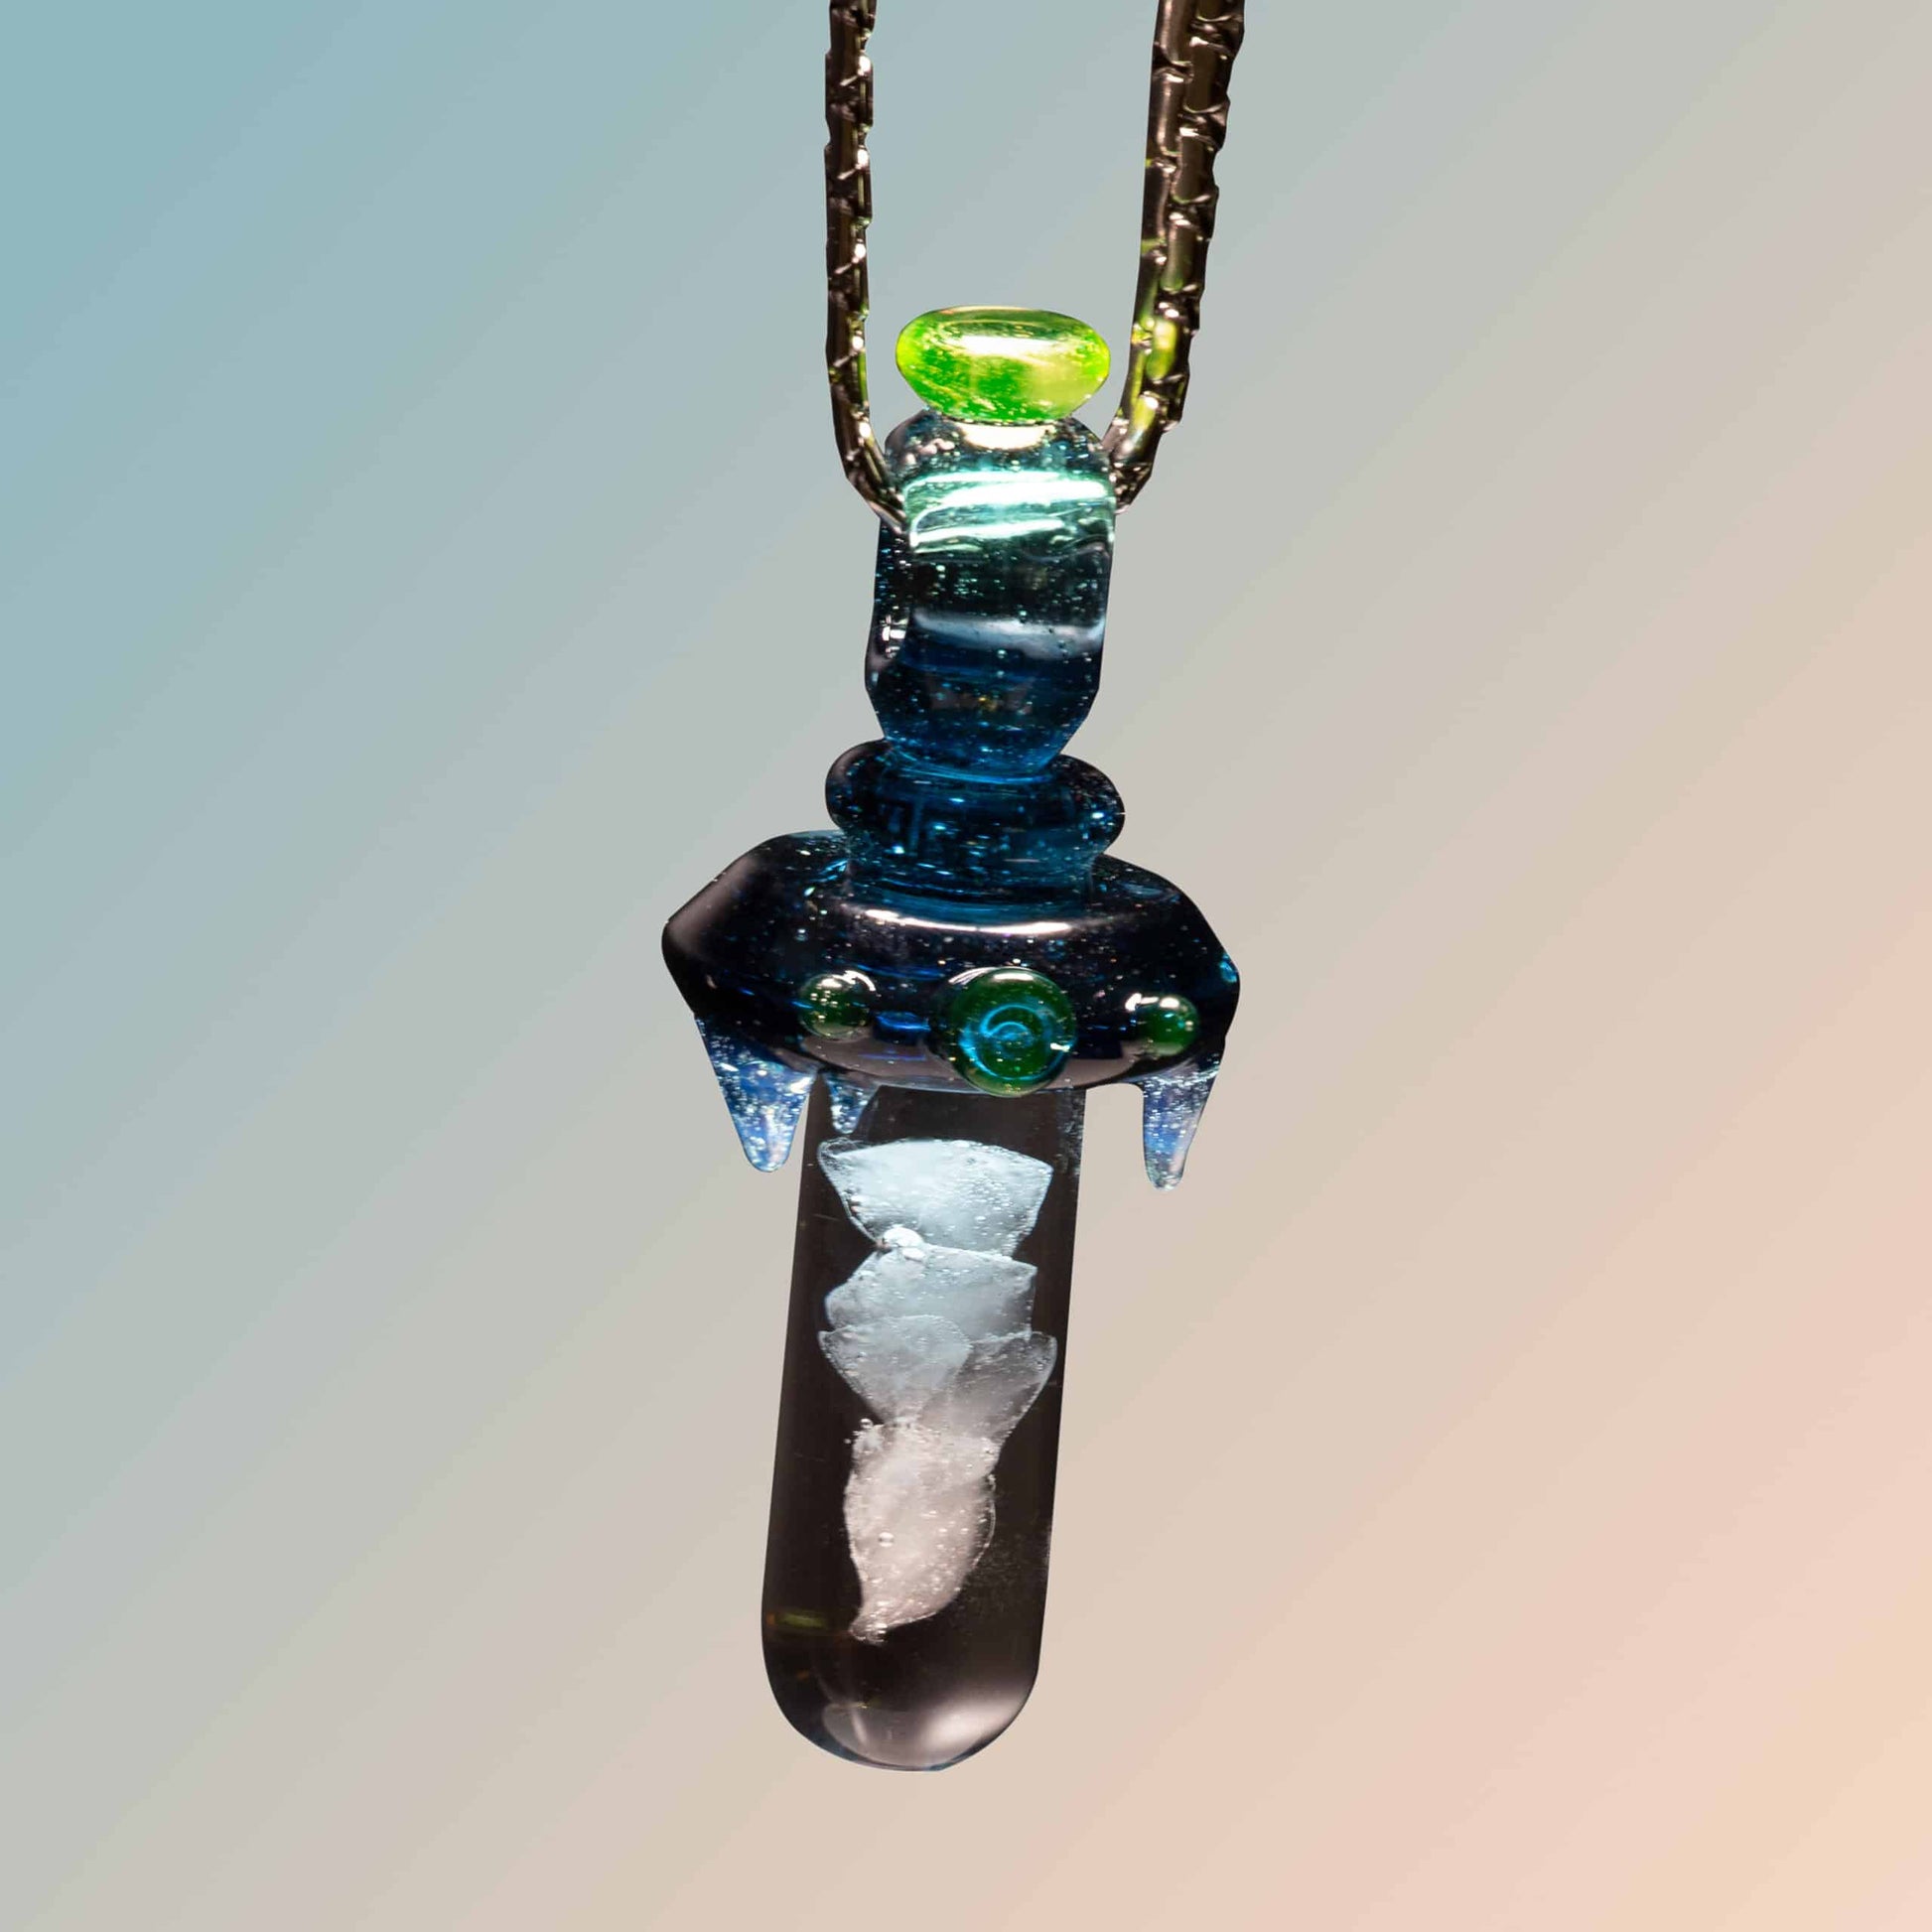 exquisite glass pendant - Cryoslush Pendant by Chaka Glass